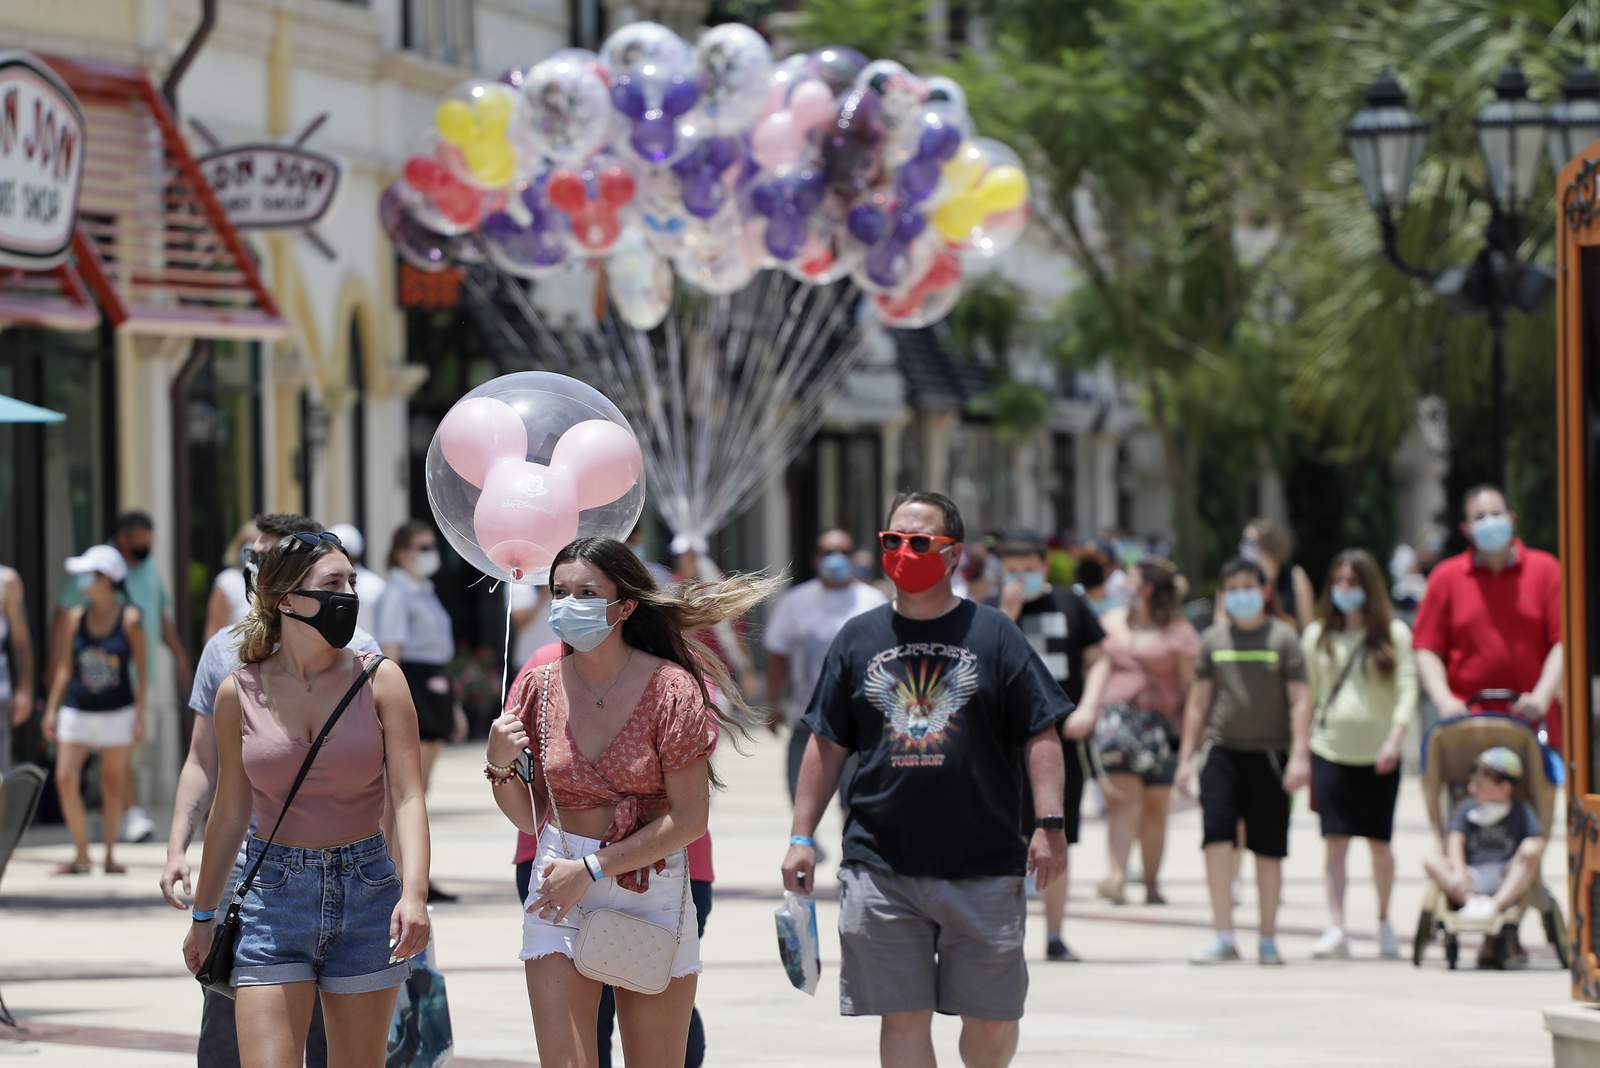 Disney World to reopen as coronavirus cases surge in Florida